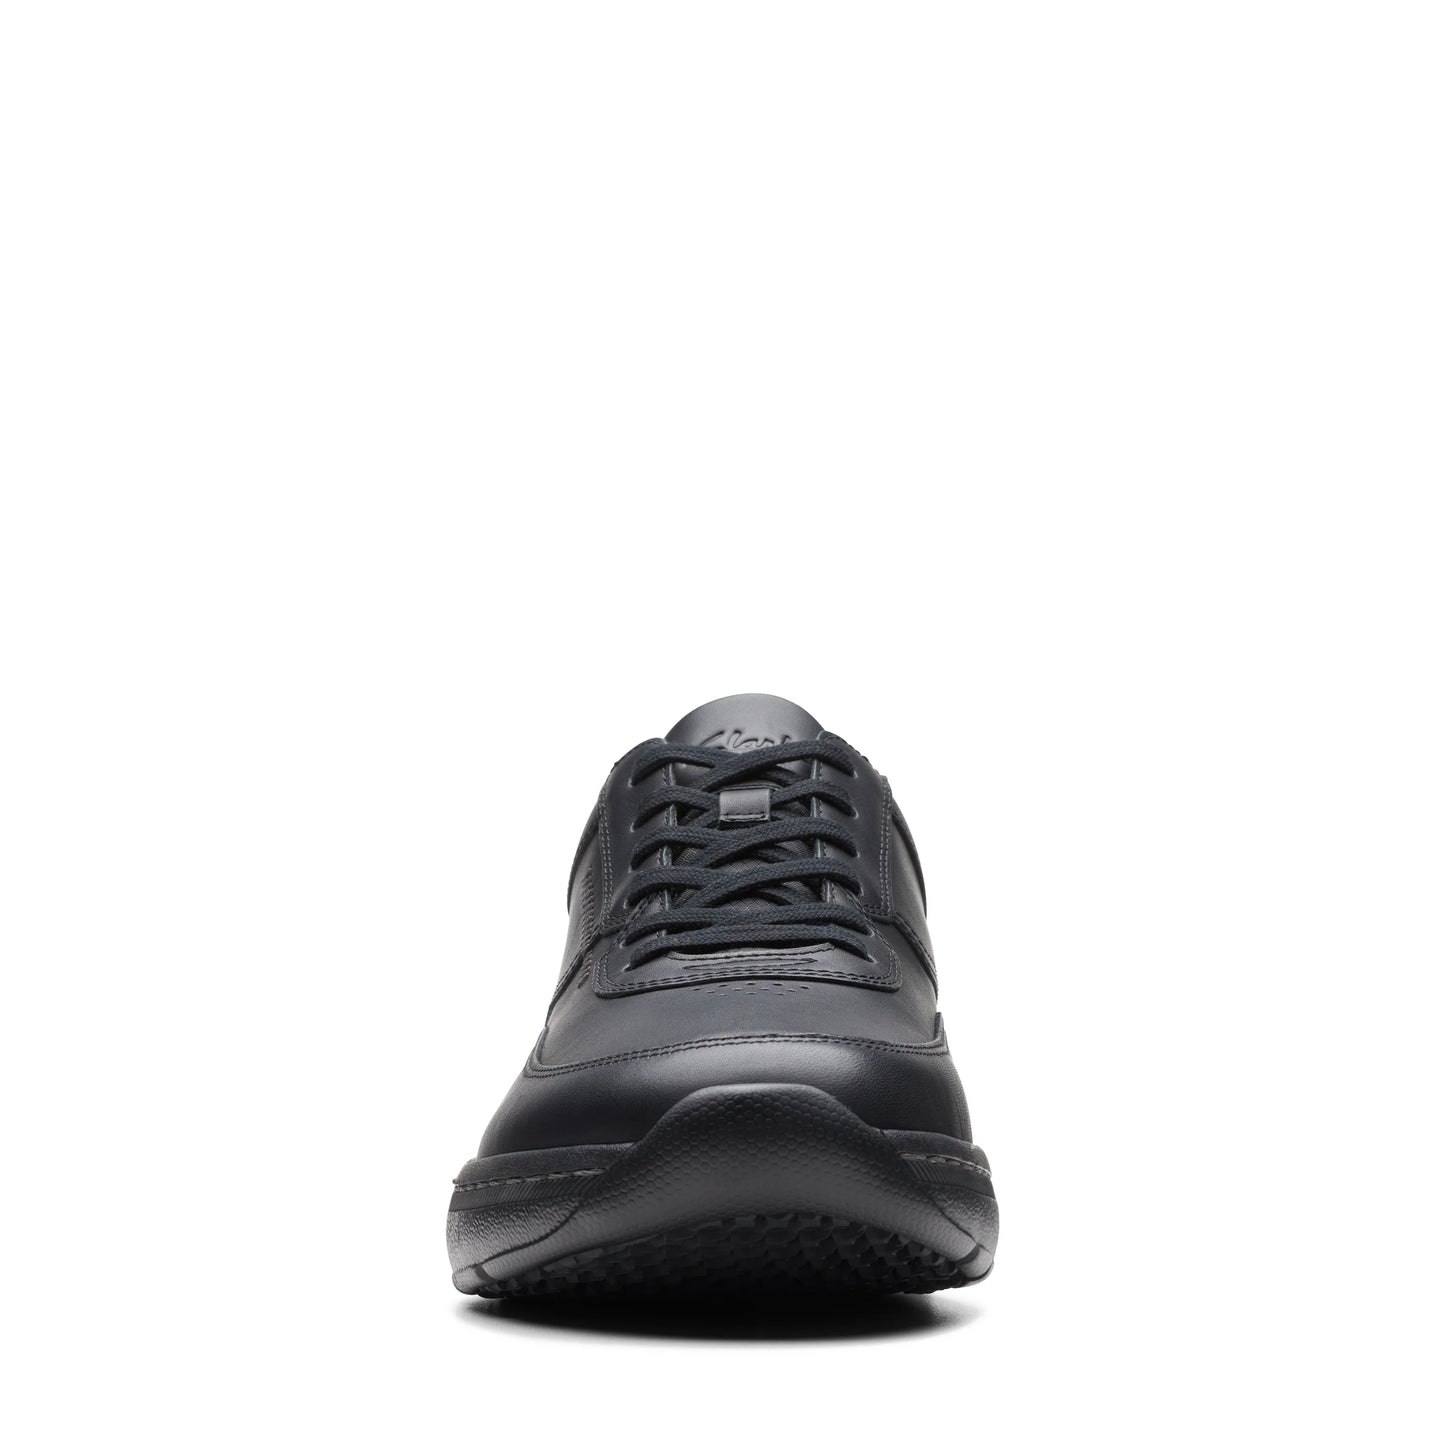 CLARKS | पुरुषों के डर्बी जूते | CLARKS PRO LACE BLACK LEATHER | काला